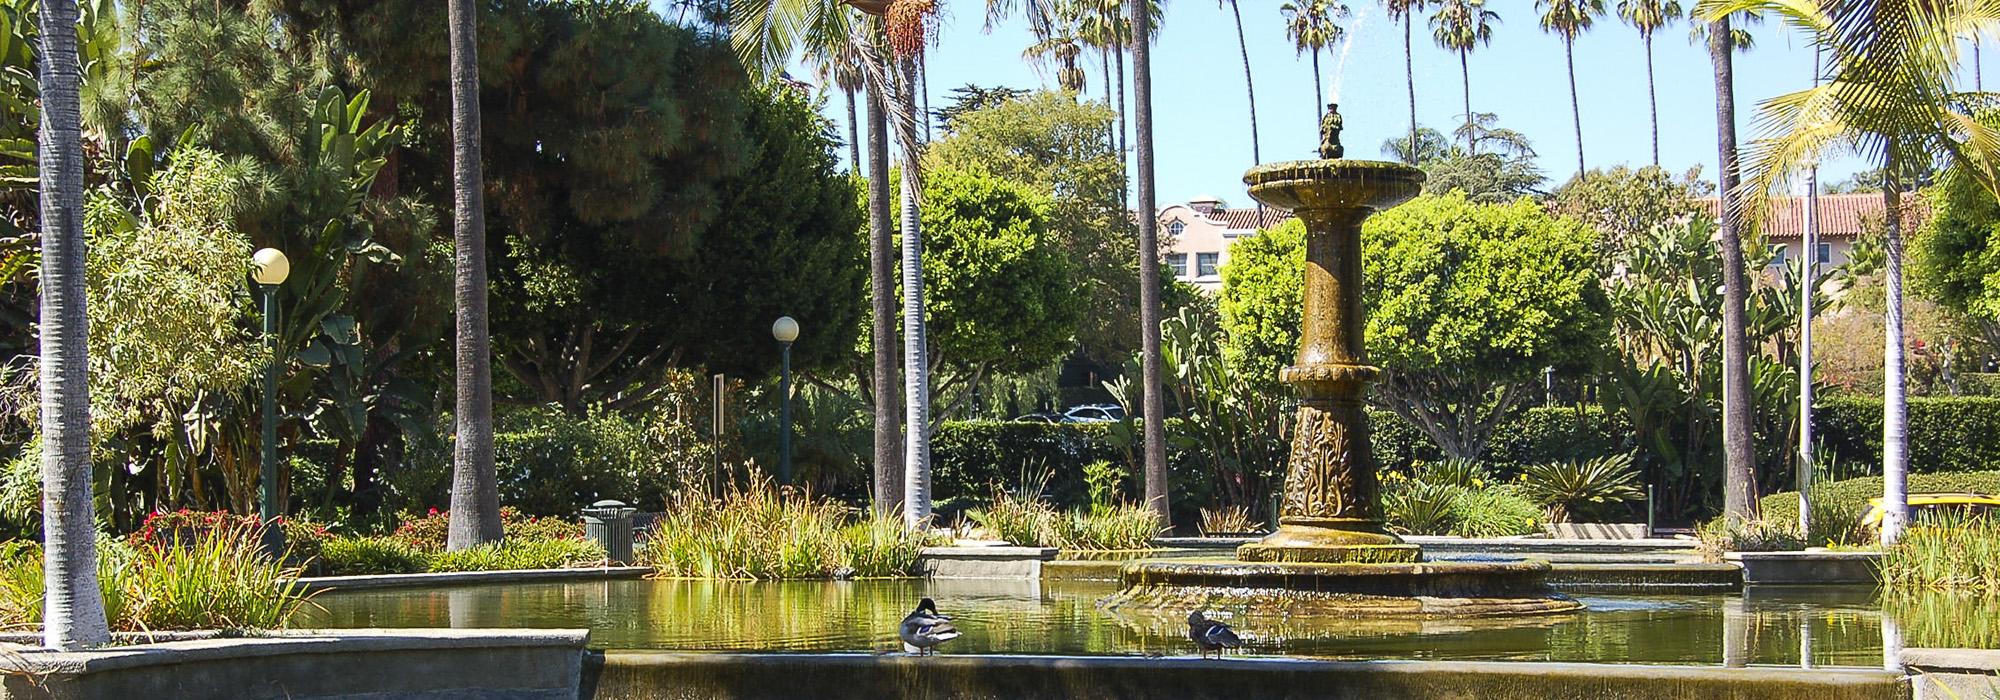 Will Rogers Memorial Park, Los Angeles, CA